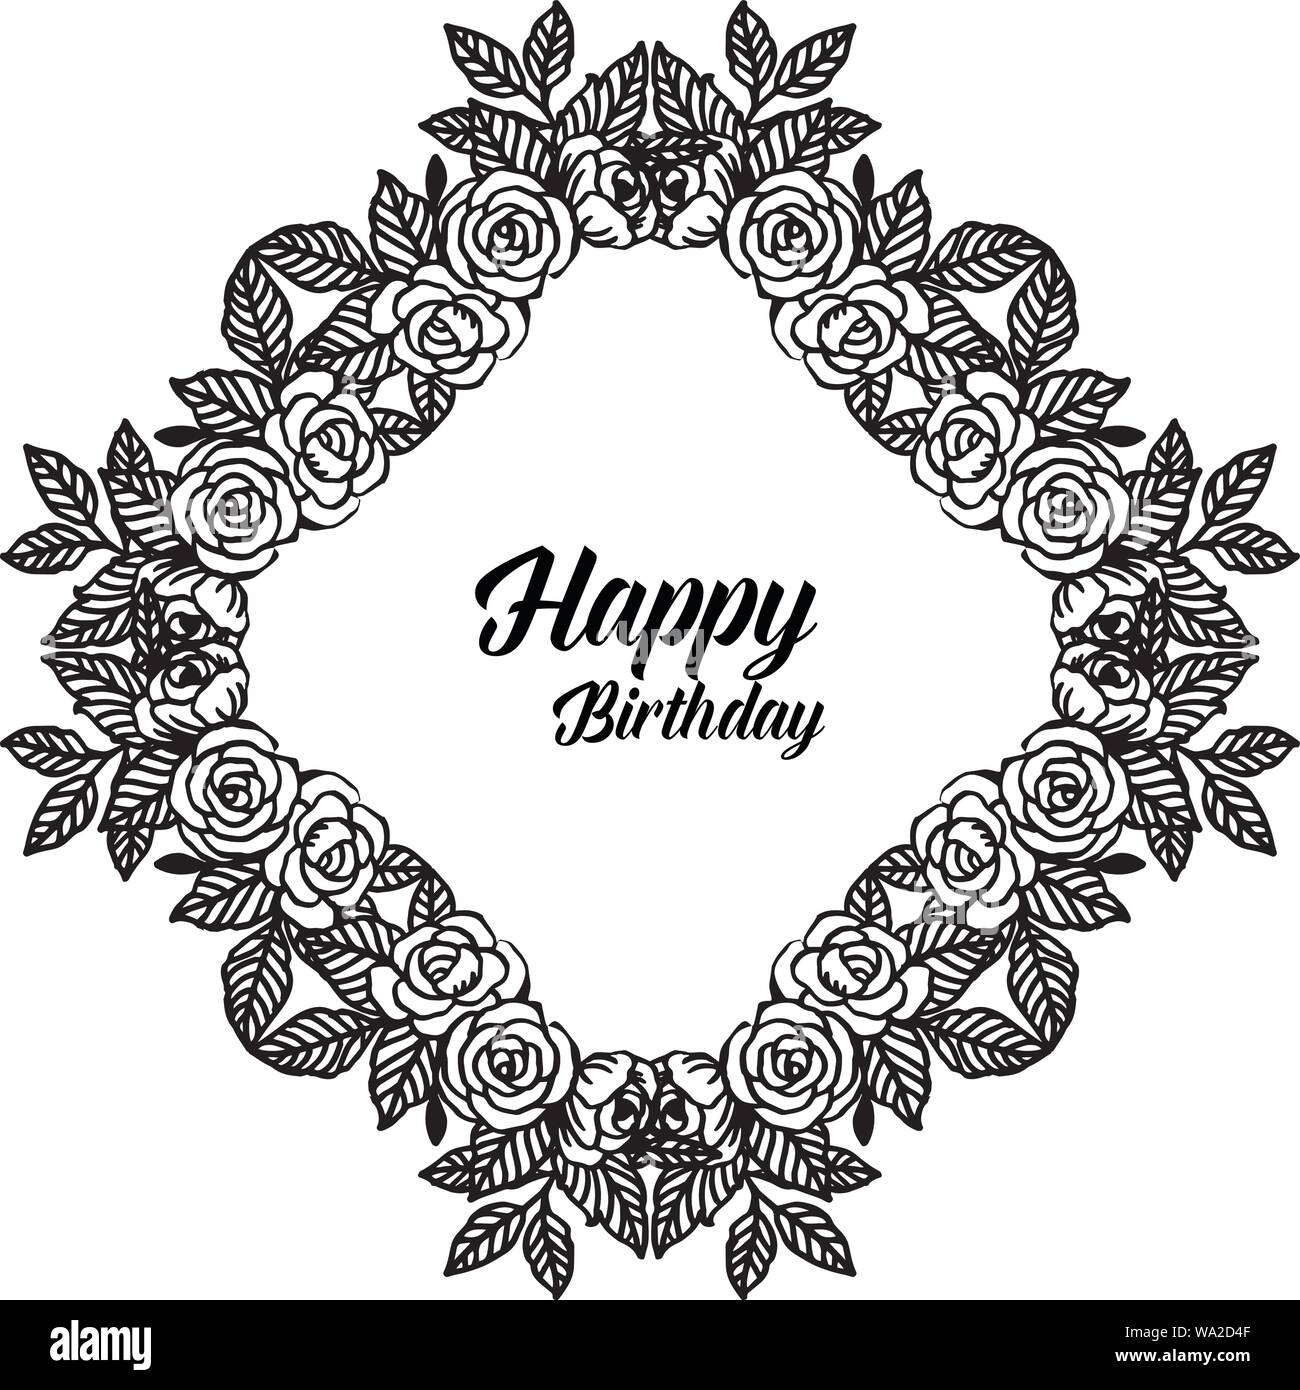 Happy birthday card design, texture cute wreath frame, style elegant ...